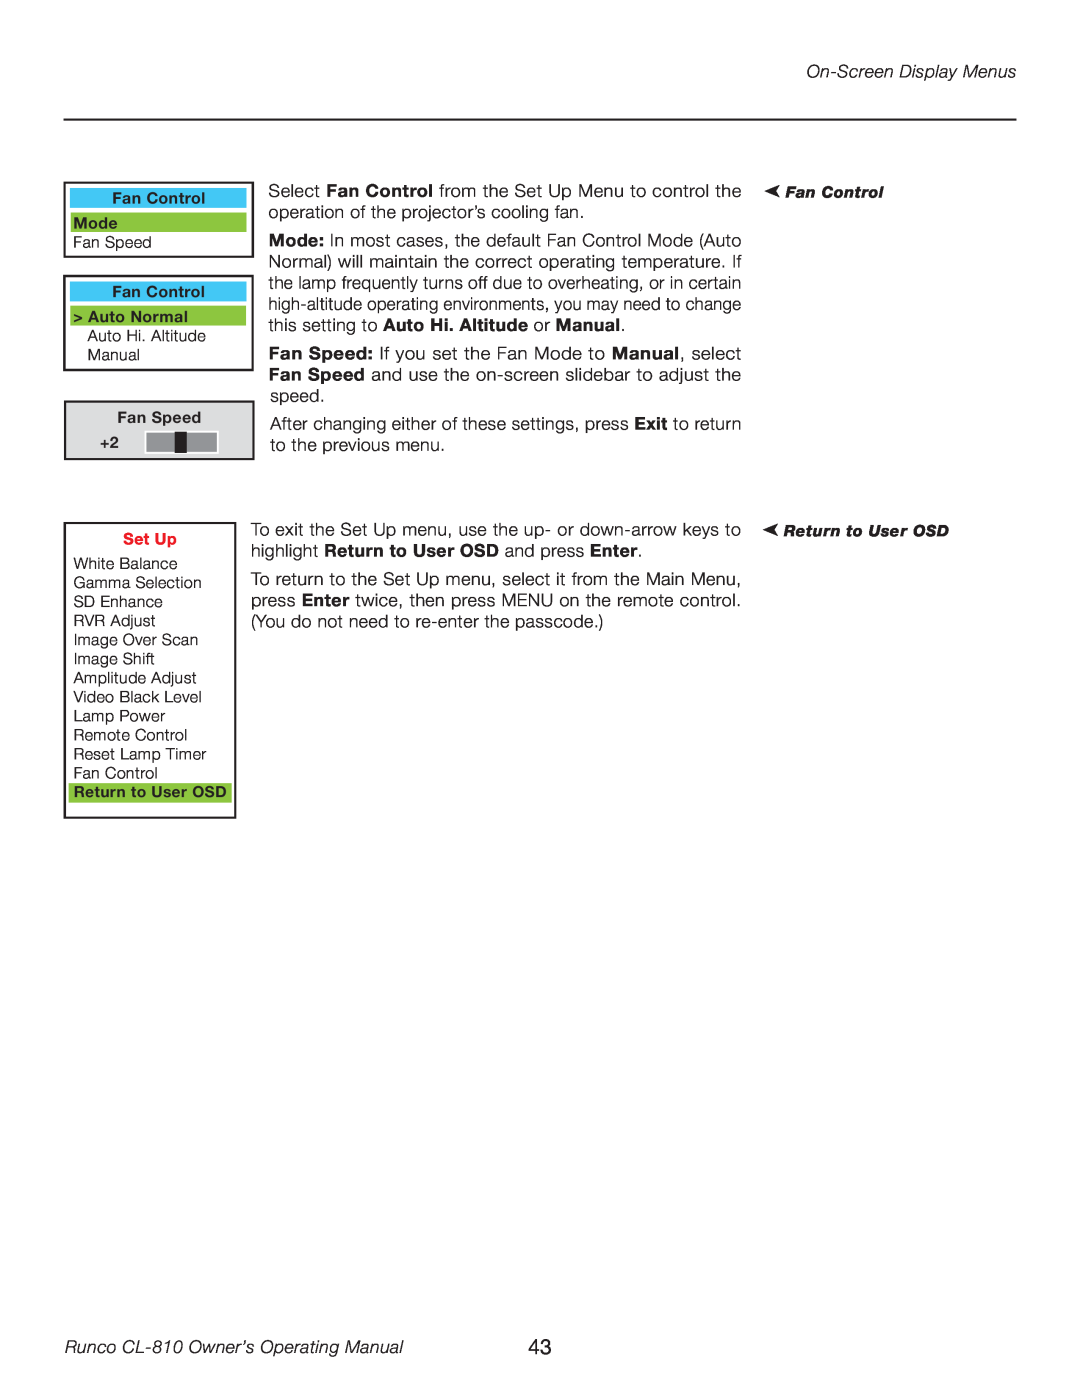 Runco manual On-Screen Display Menus, Runco CL-810 Owner’s Operating Manual, Fan Control Mode, Return to User OSD 